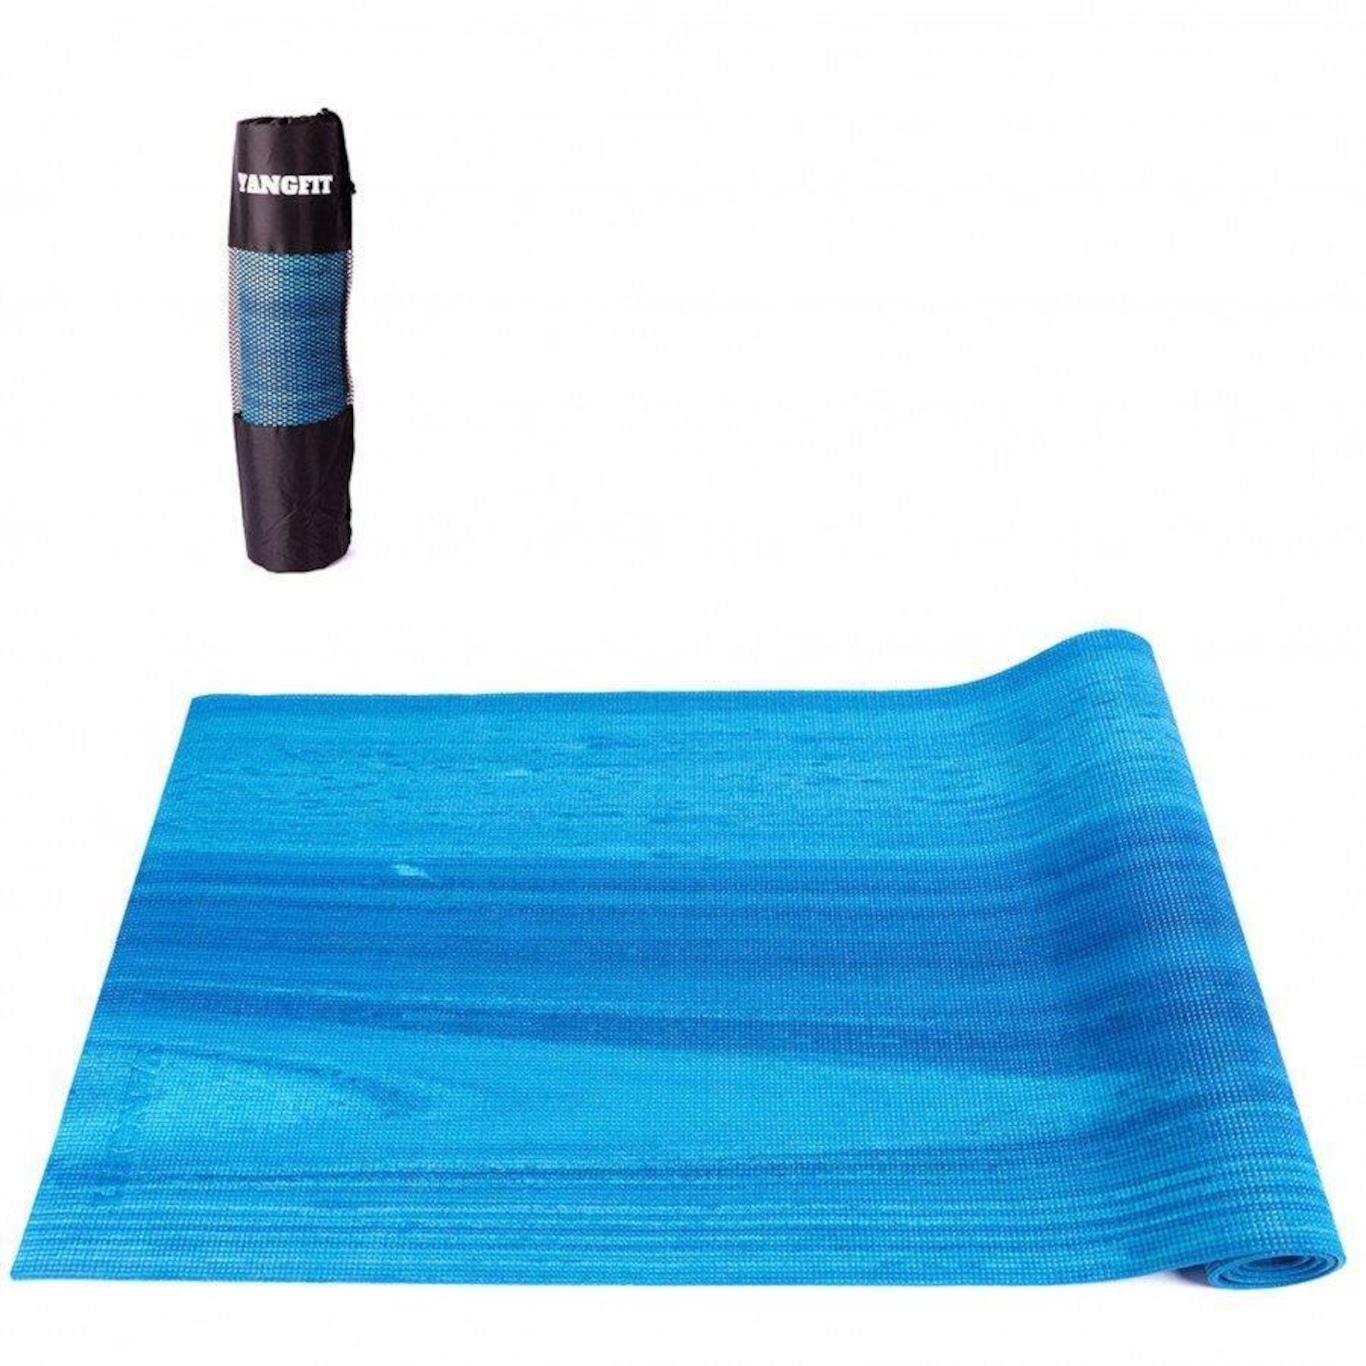 Tapete Yoga Yangfit Mat Pilates Pvc Ecológico Rainbow - 6mm - Foto 1